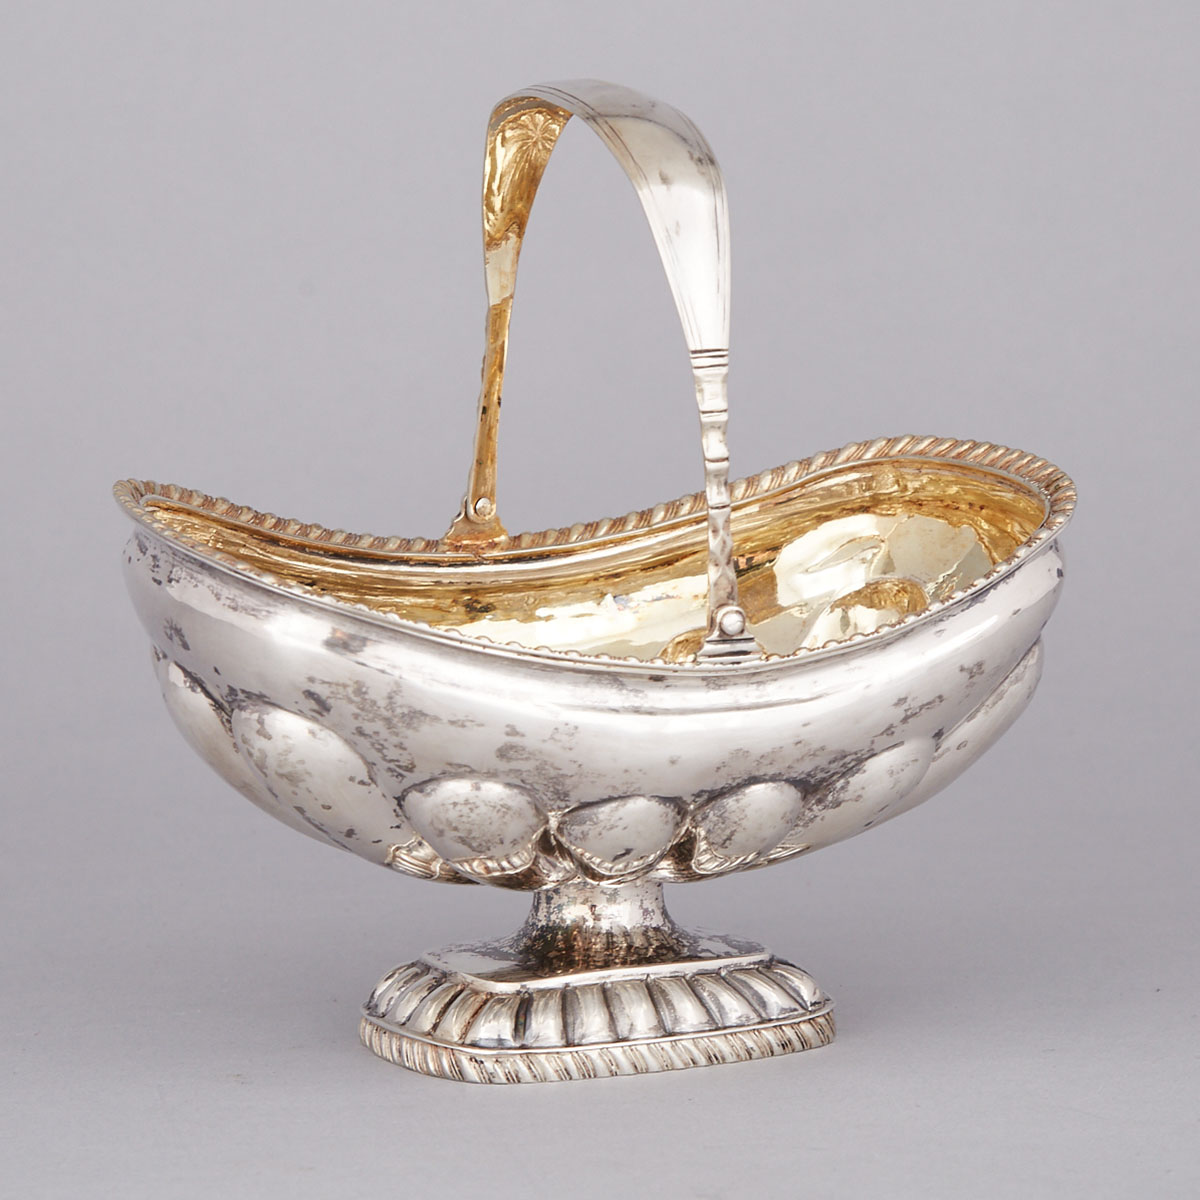 Russian Silver Sugar Basket, probably Alexander Yarshinov, St. Petersburg, c.1800